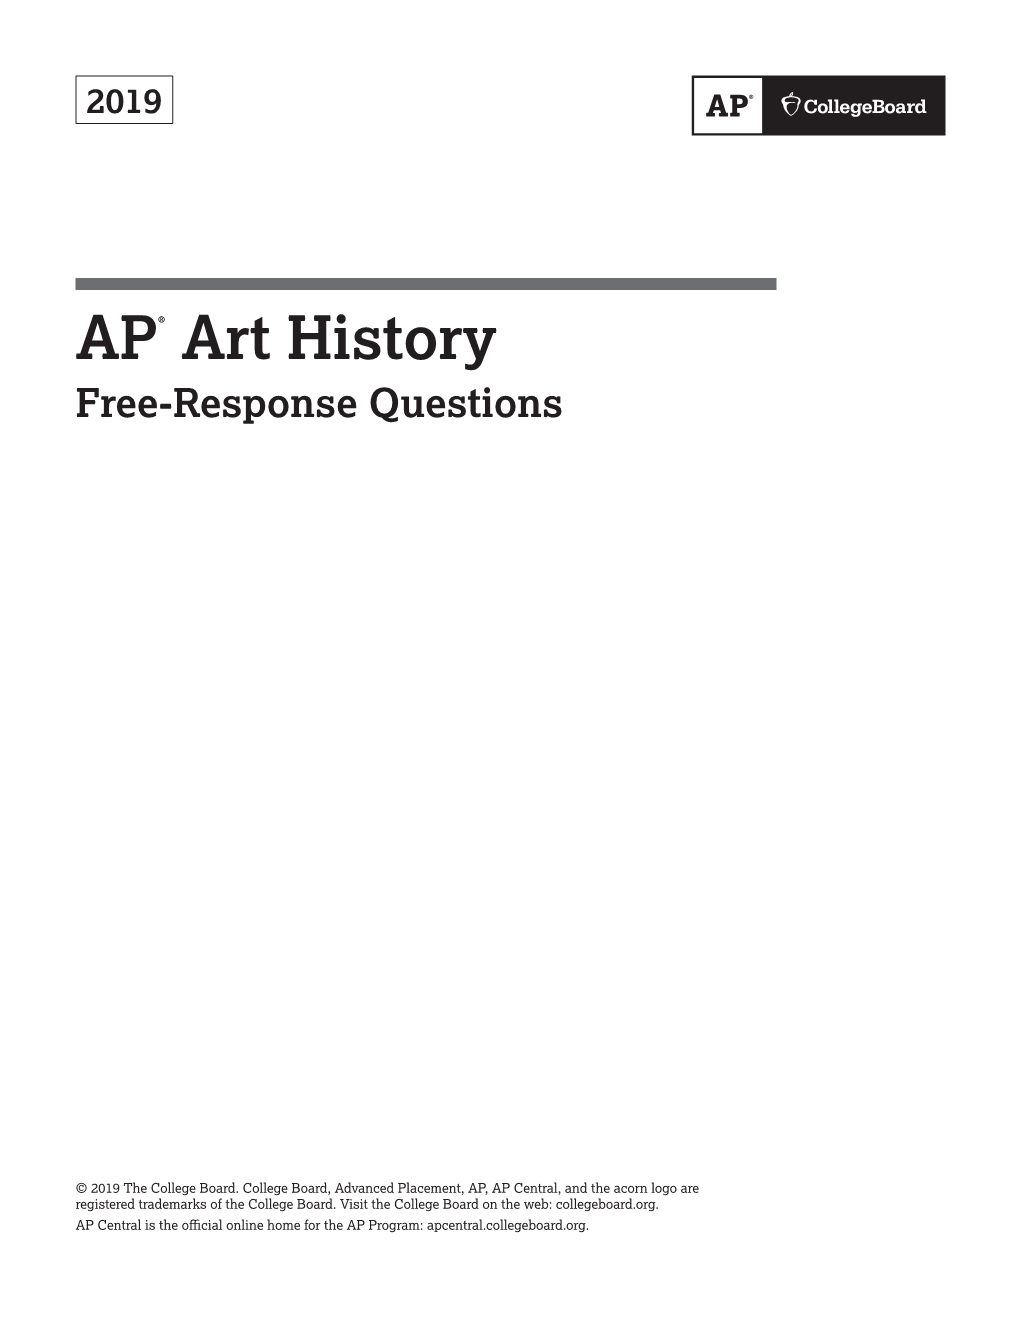 AP Art History 2019 Free-Response Questions